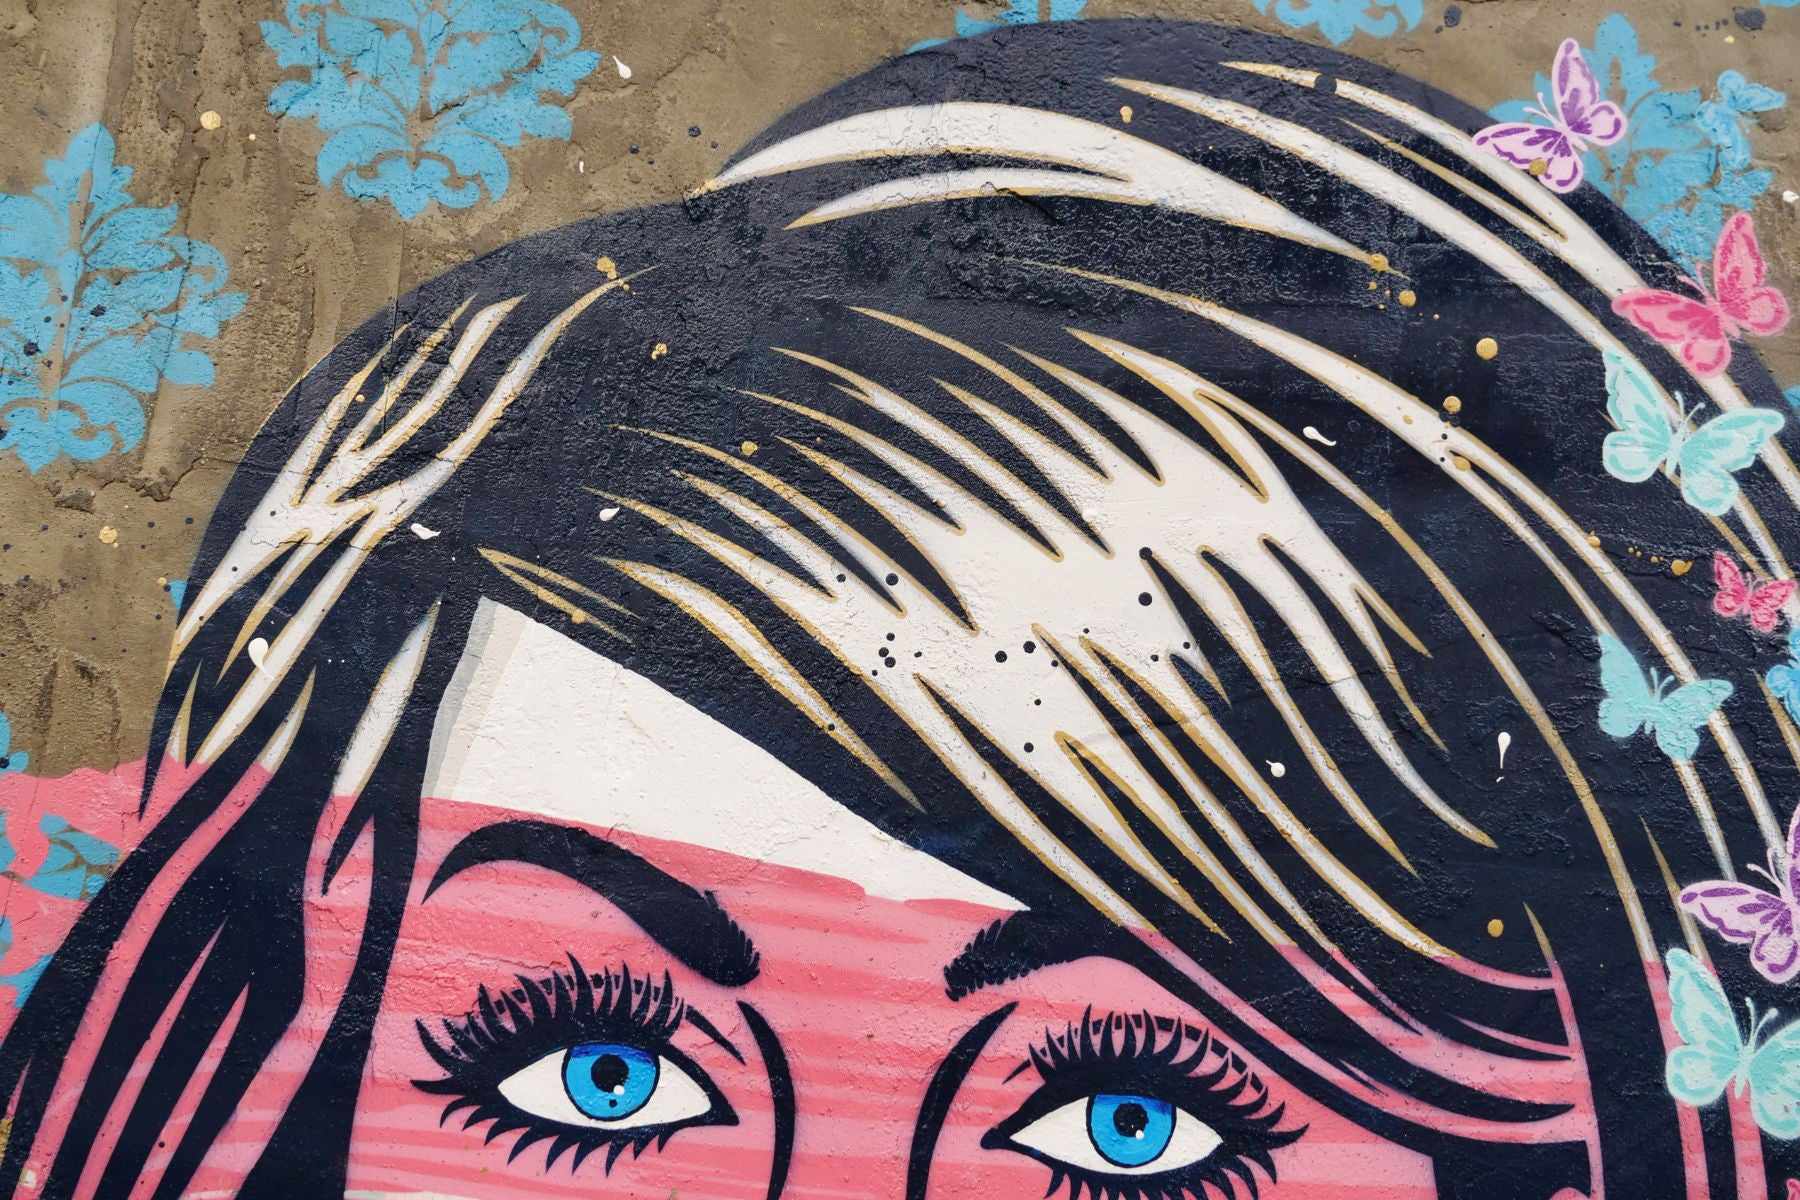 Cotton Kandy 120cm x 150cm Beautiful Woman Industrial Concrete Urban Pop Art Painting